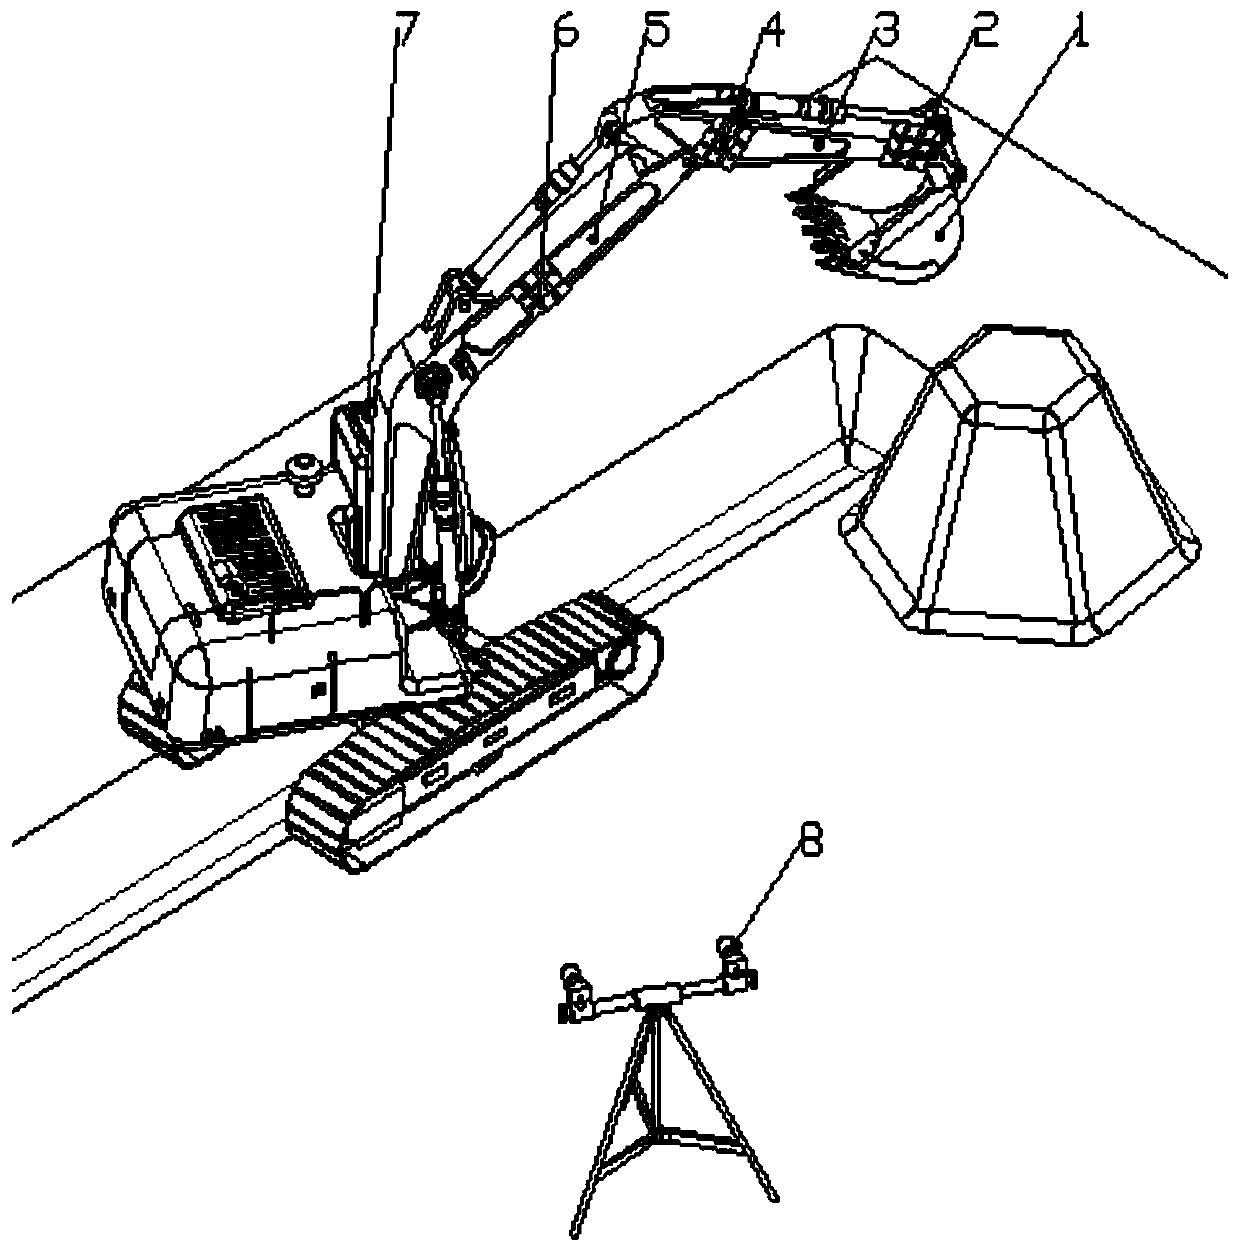 Monocular vision excavator pose measuring system and measuring method based on target